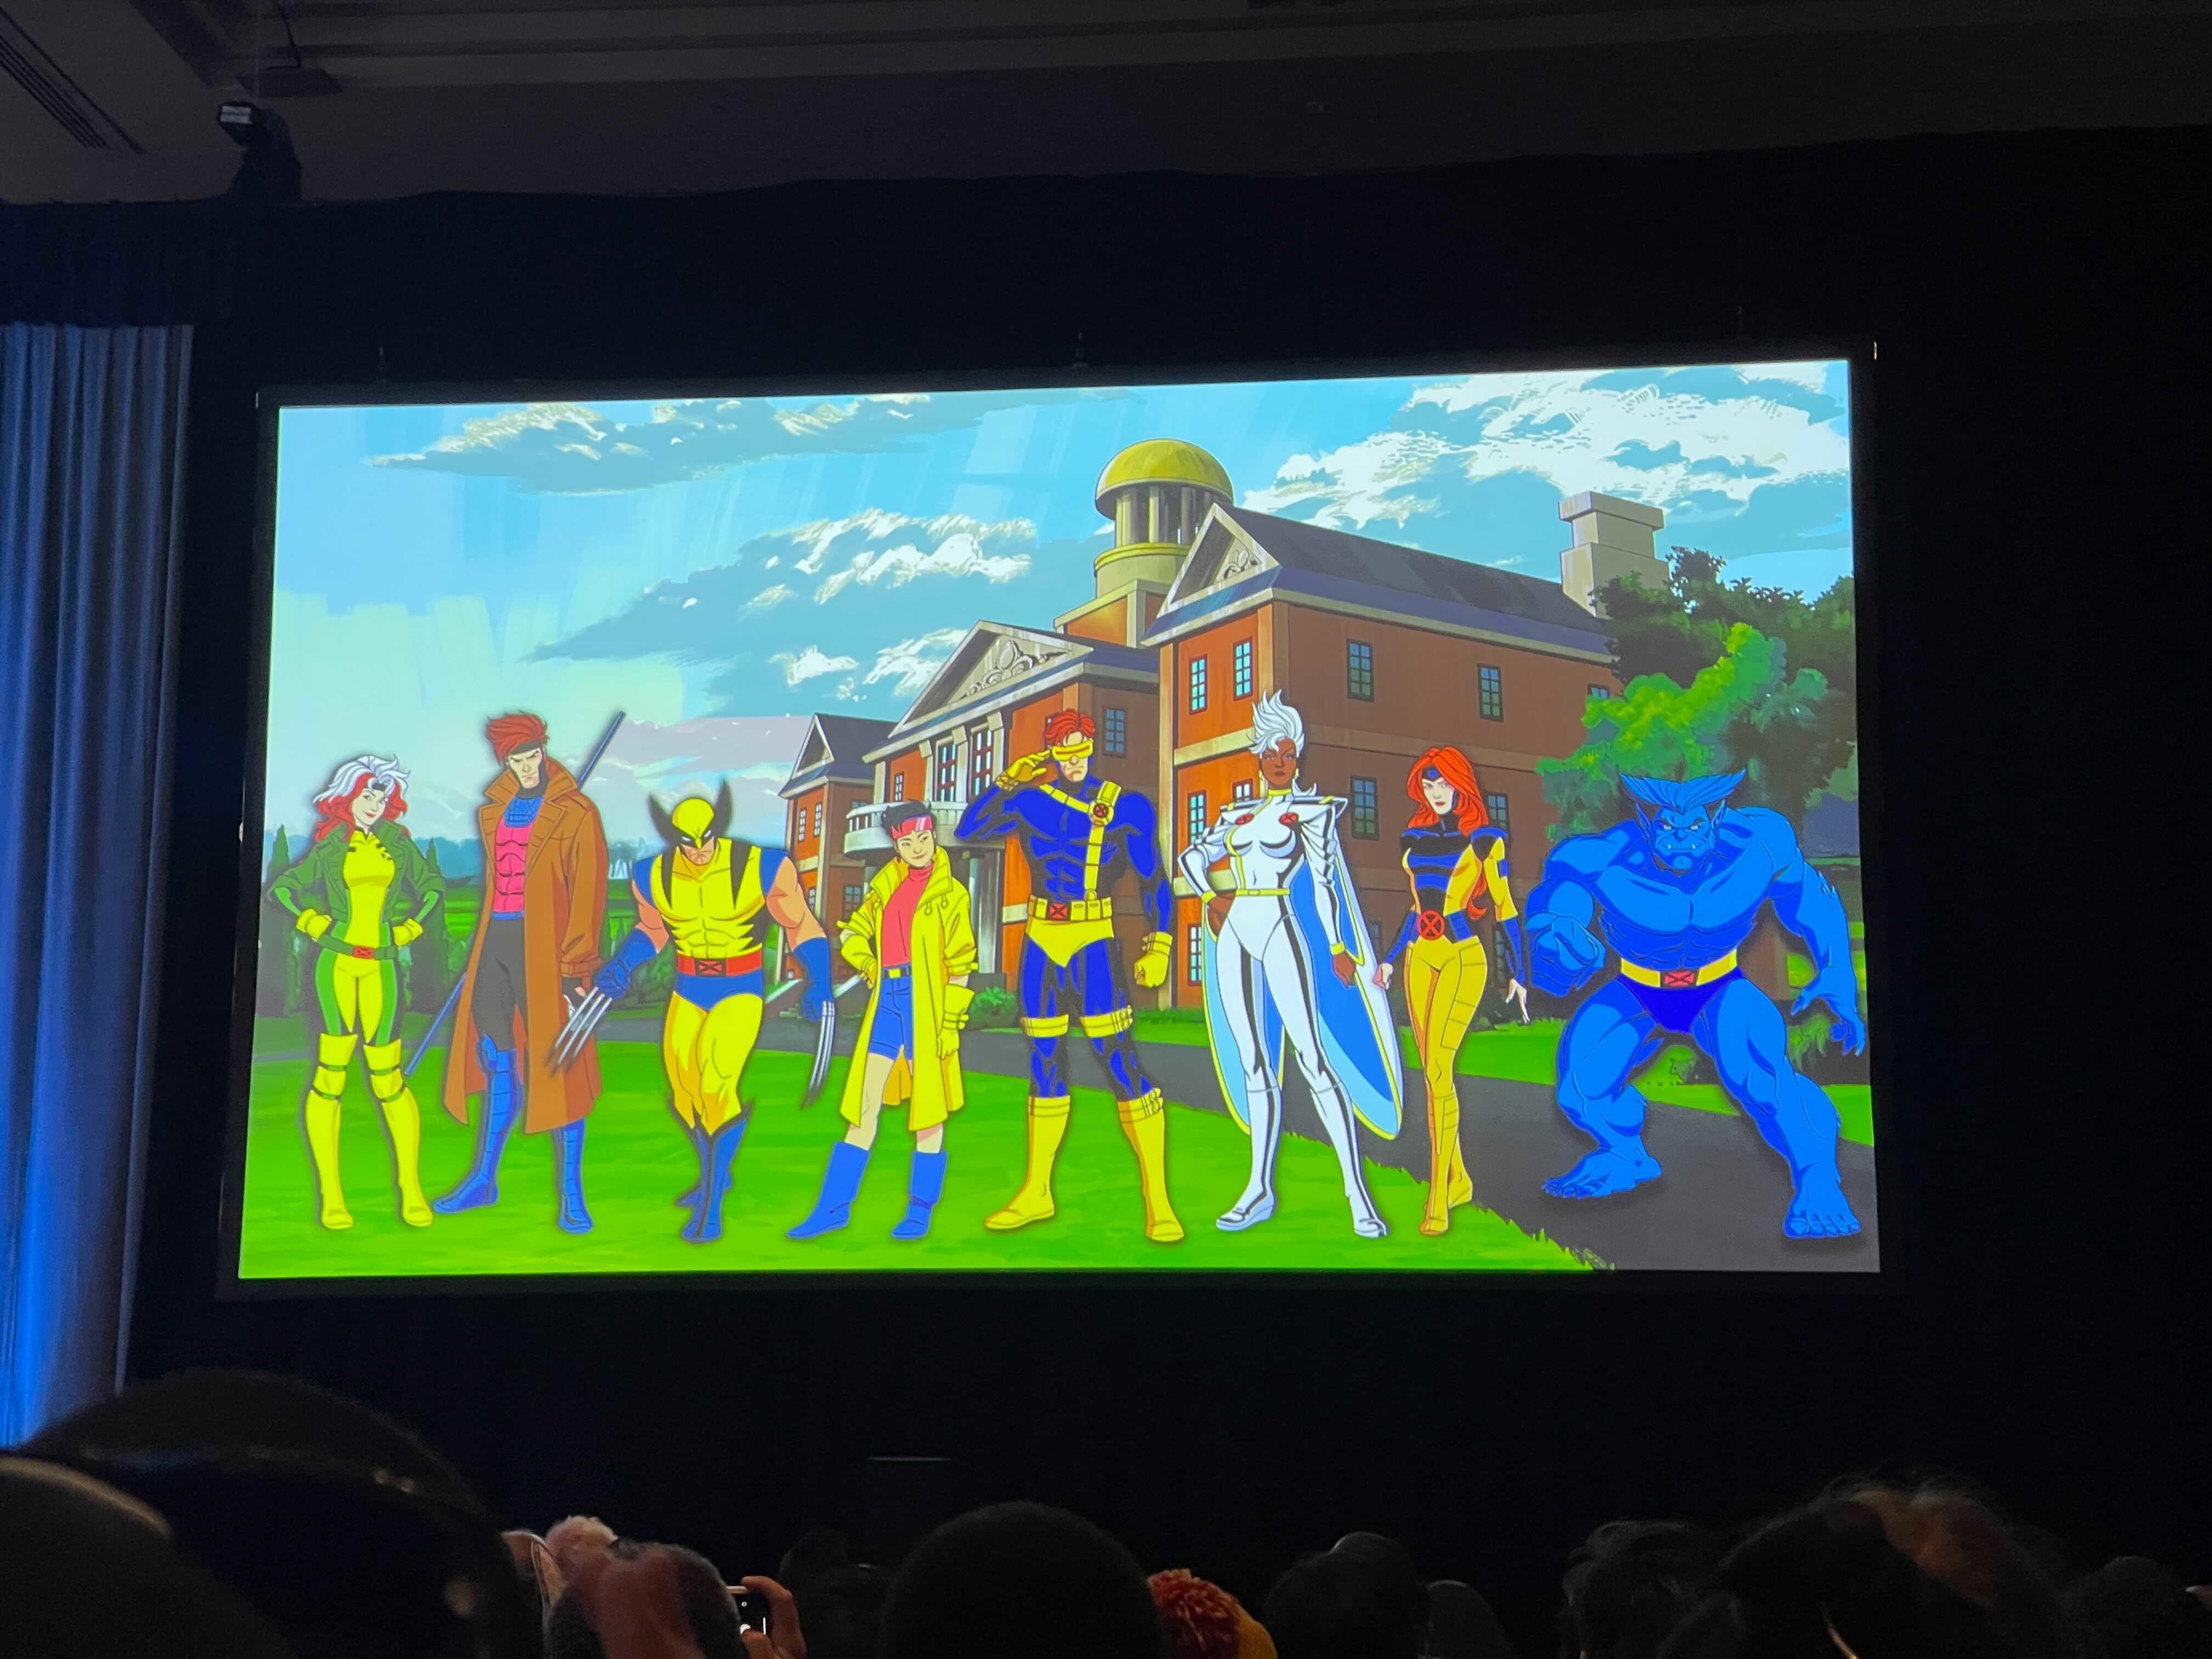 Comic Con 2022: X-Men '97 Panel Footage Description